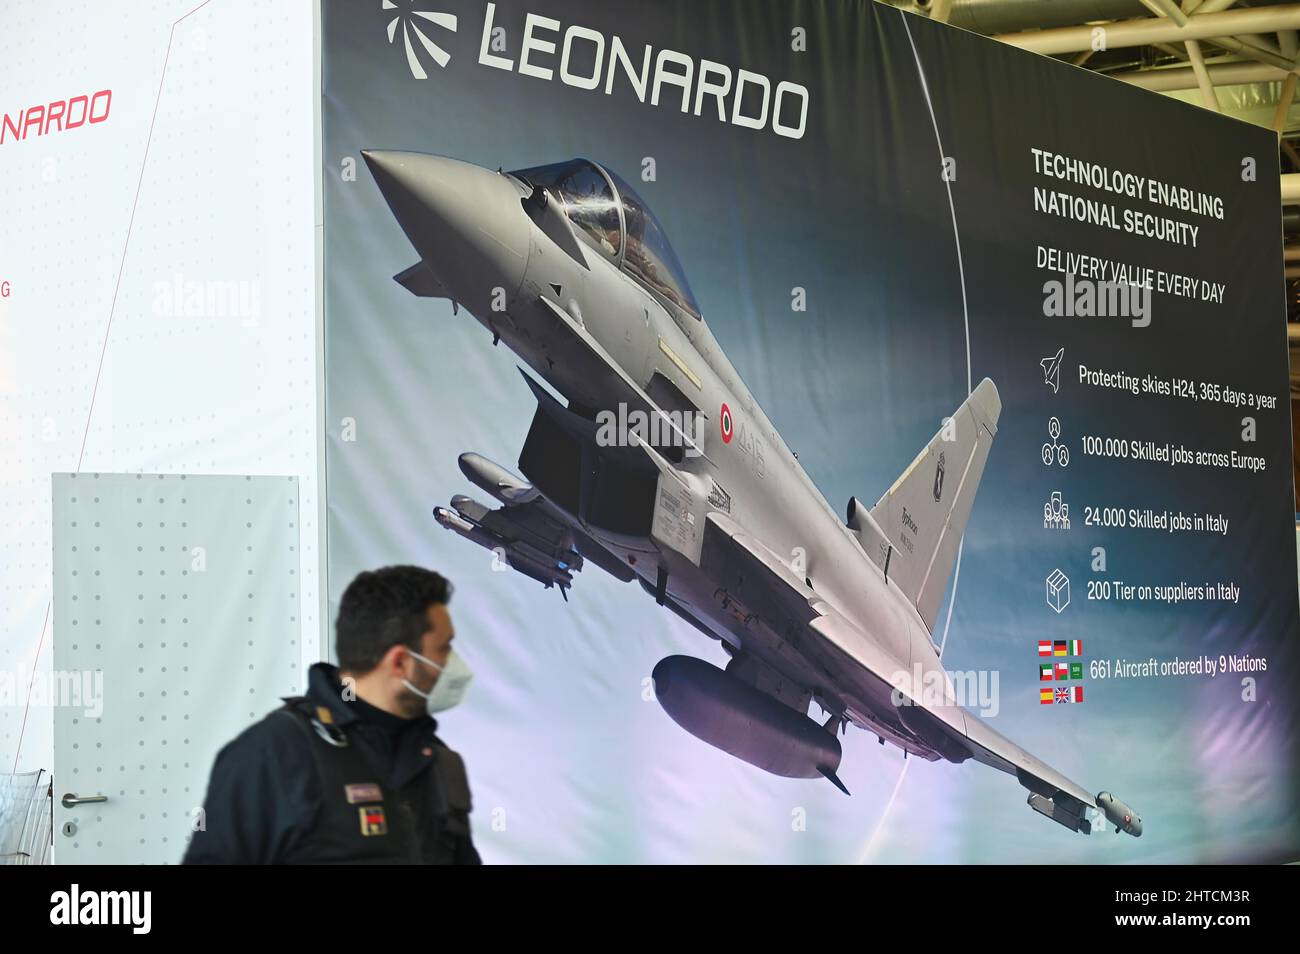 Leonardo aviation and defense equipment company booth and logo at an aerospace fair Stock Photo